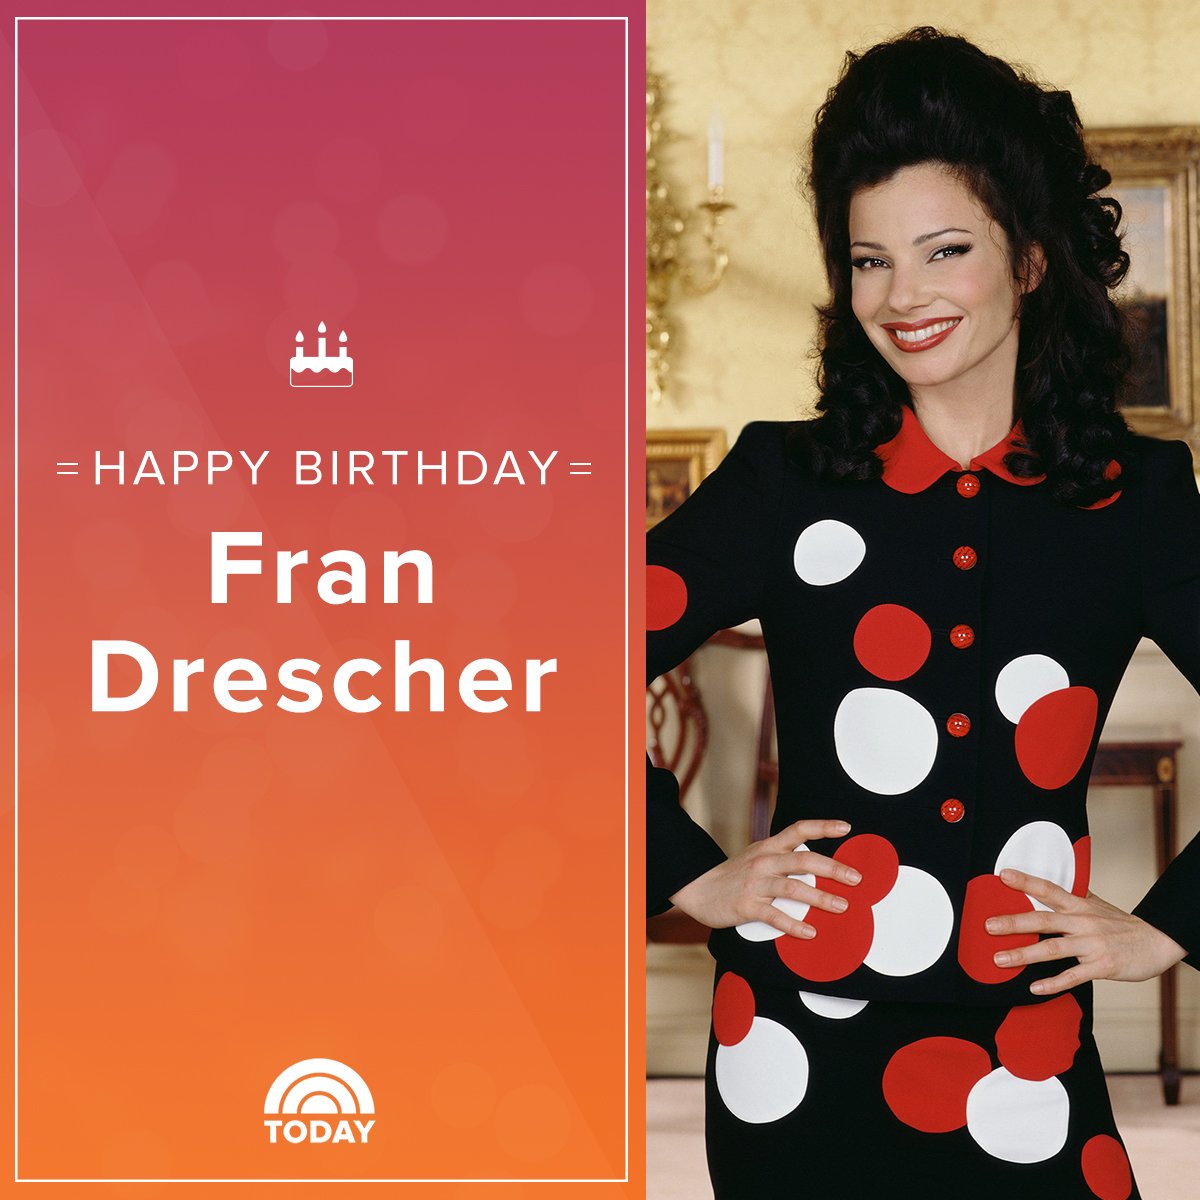 Happy 60th birthday, Fran Drescher!  